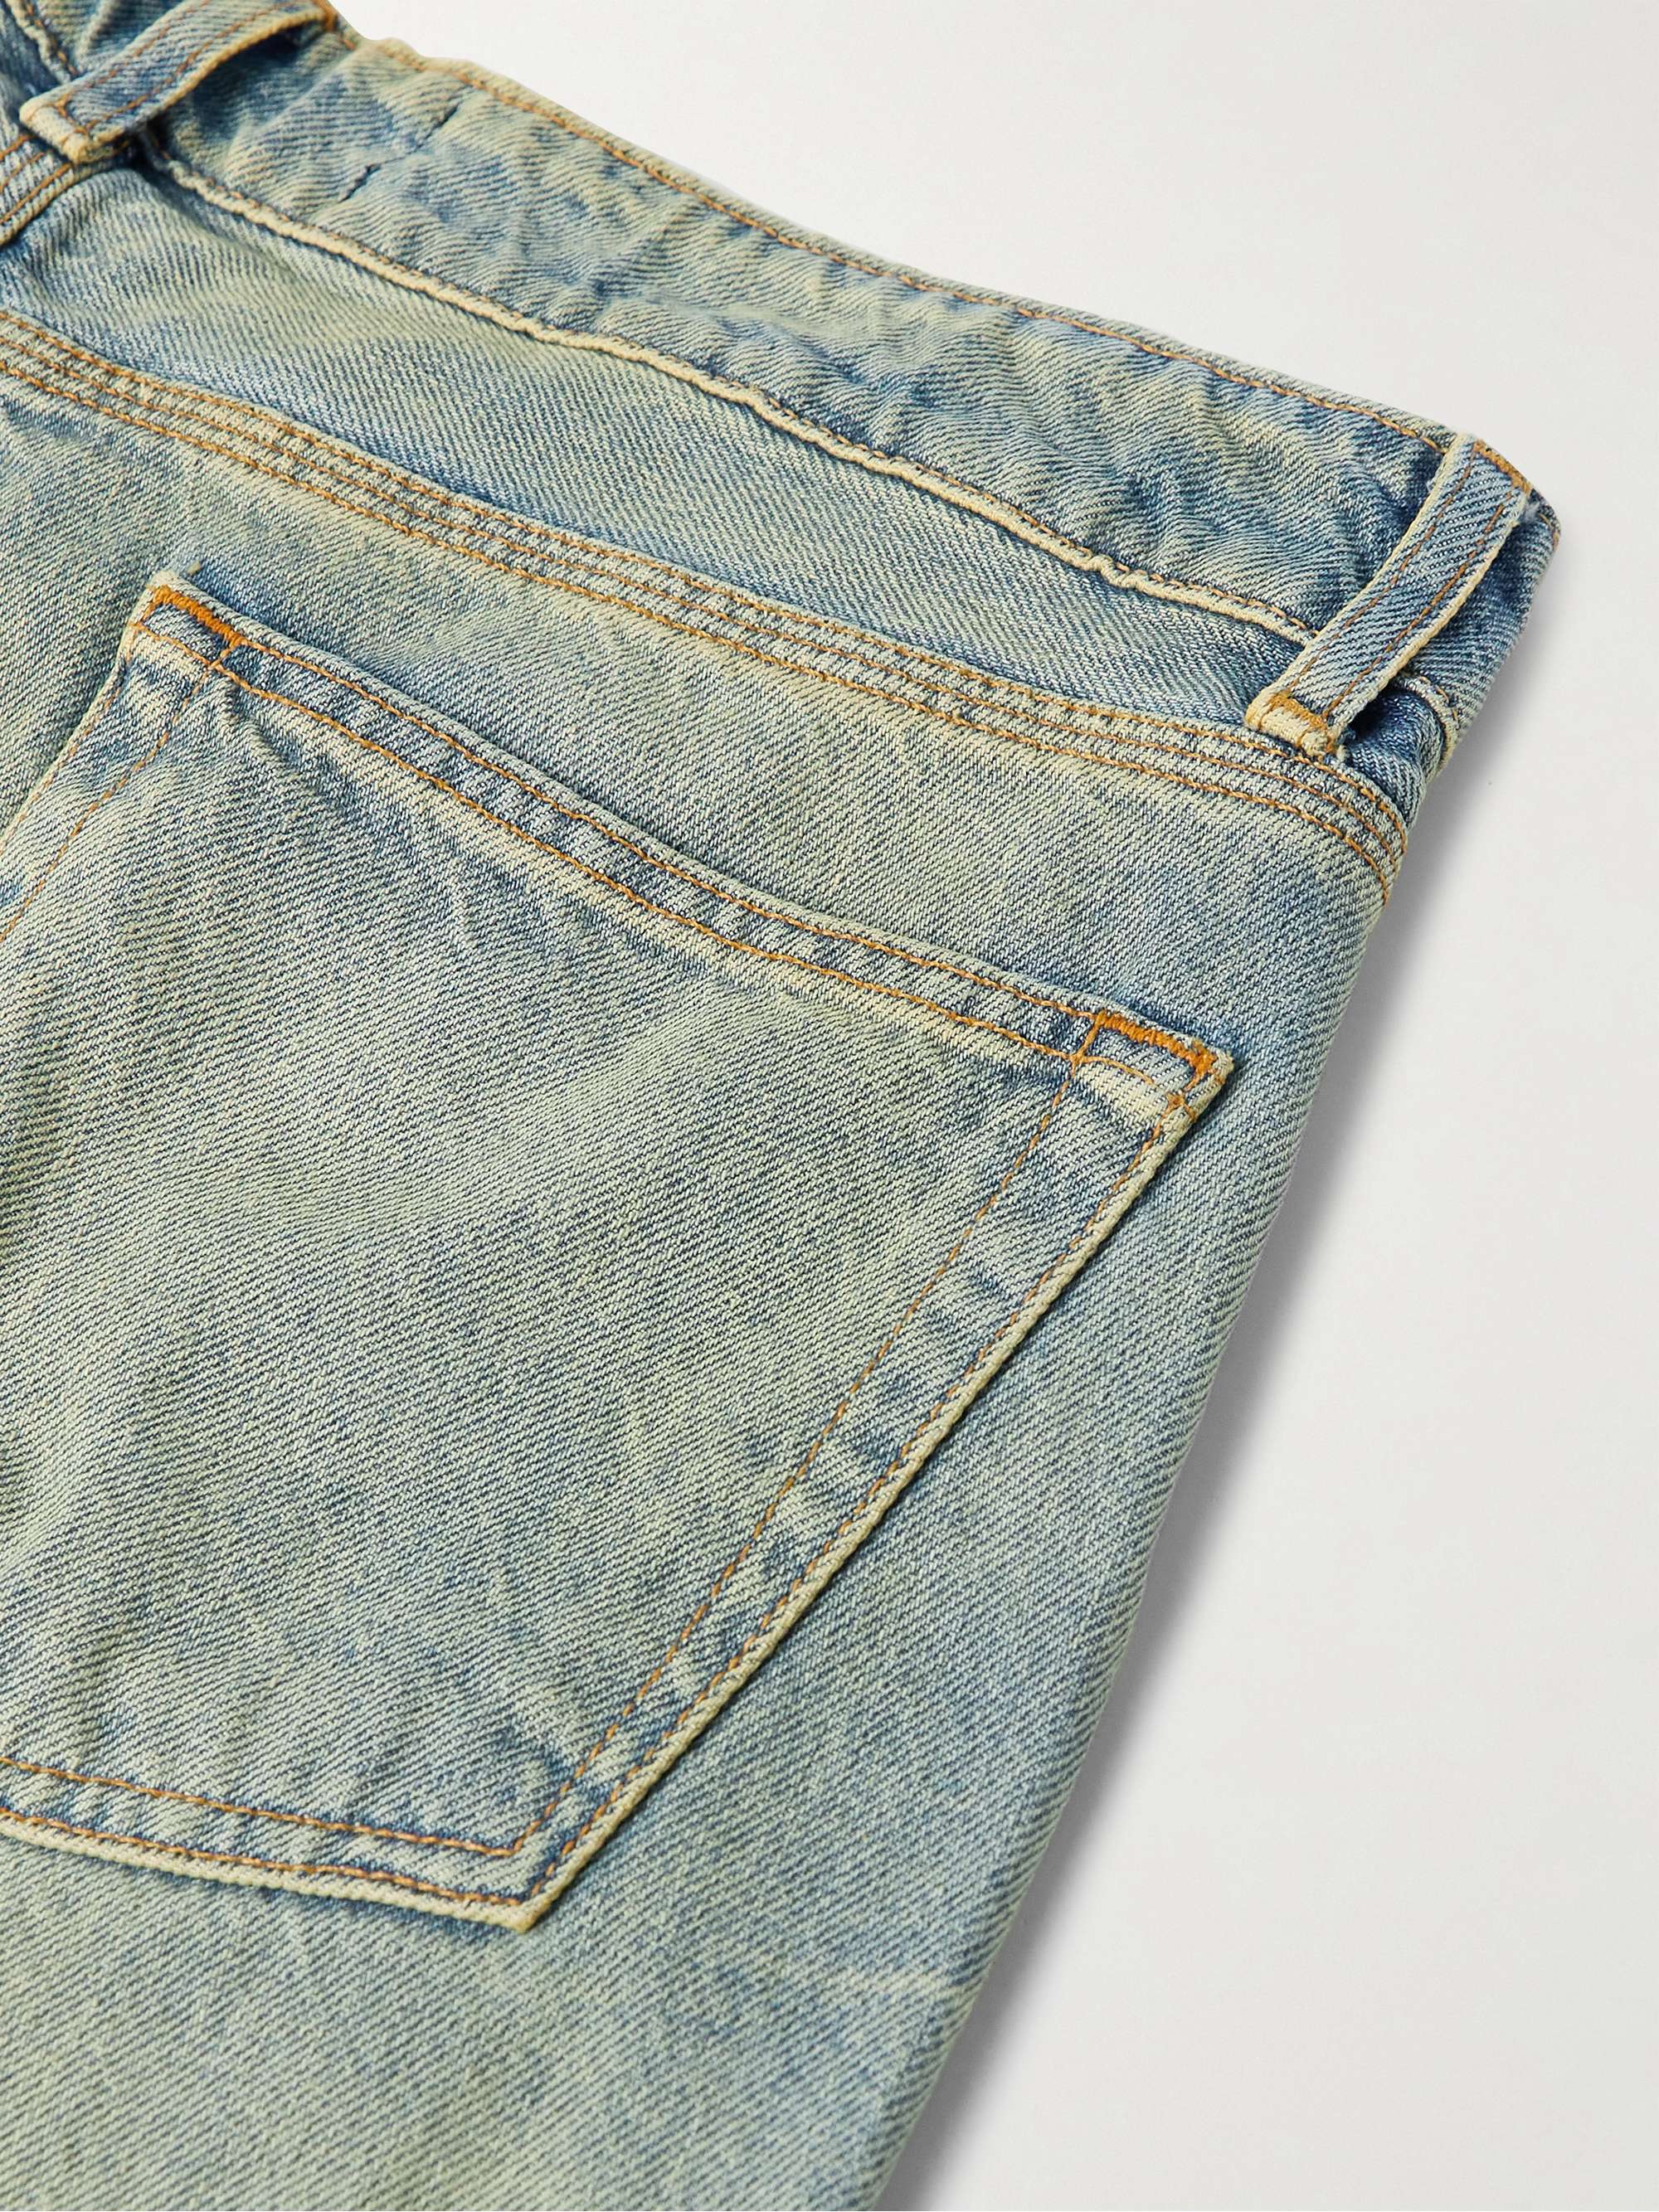 REESE COOPER® Slim-Fit Jeans